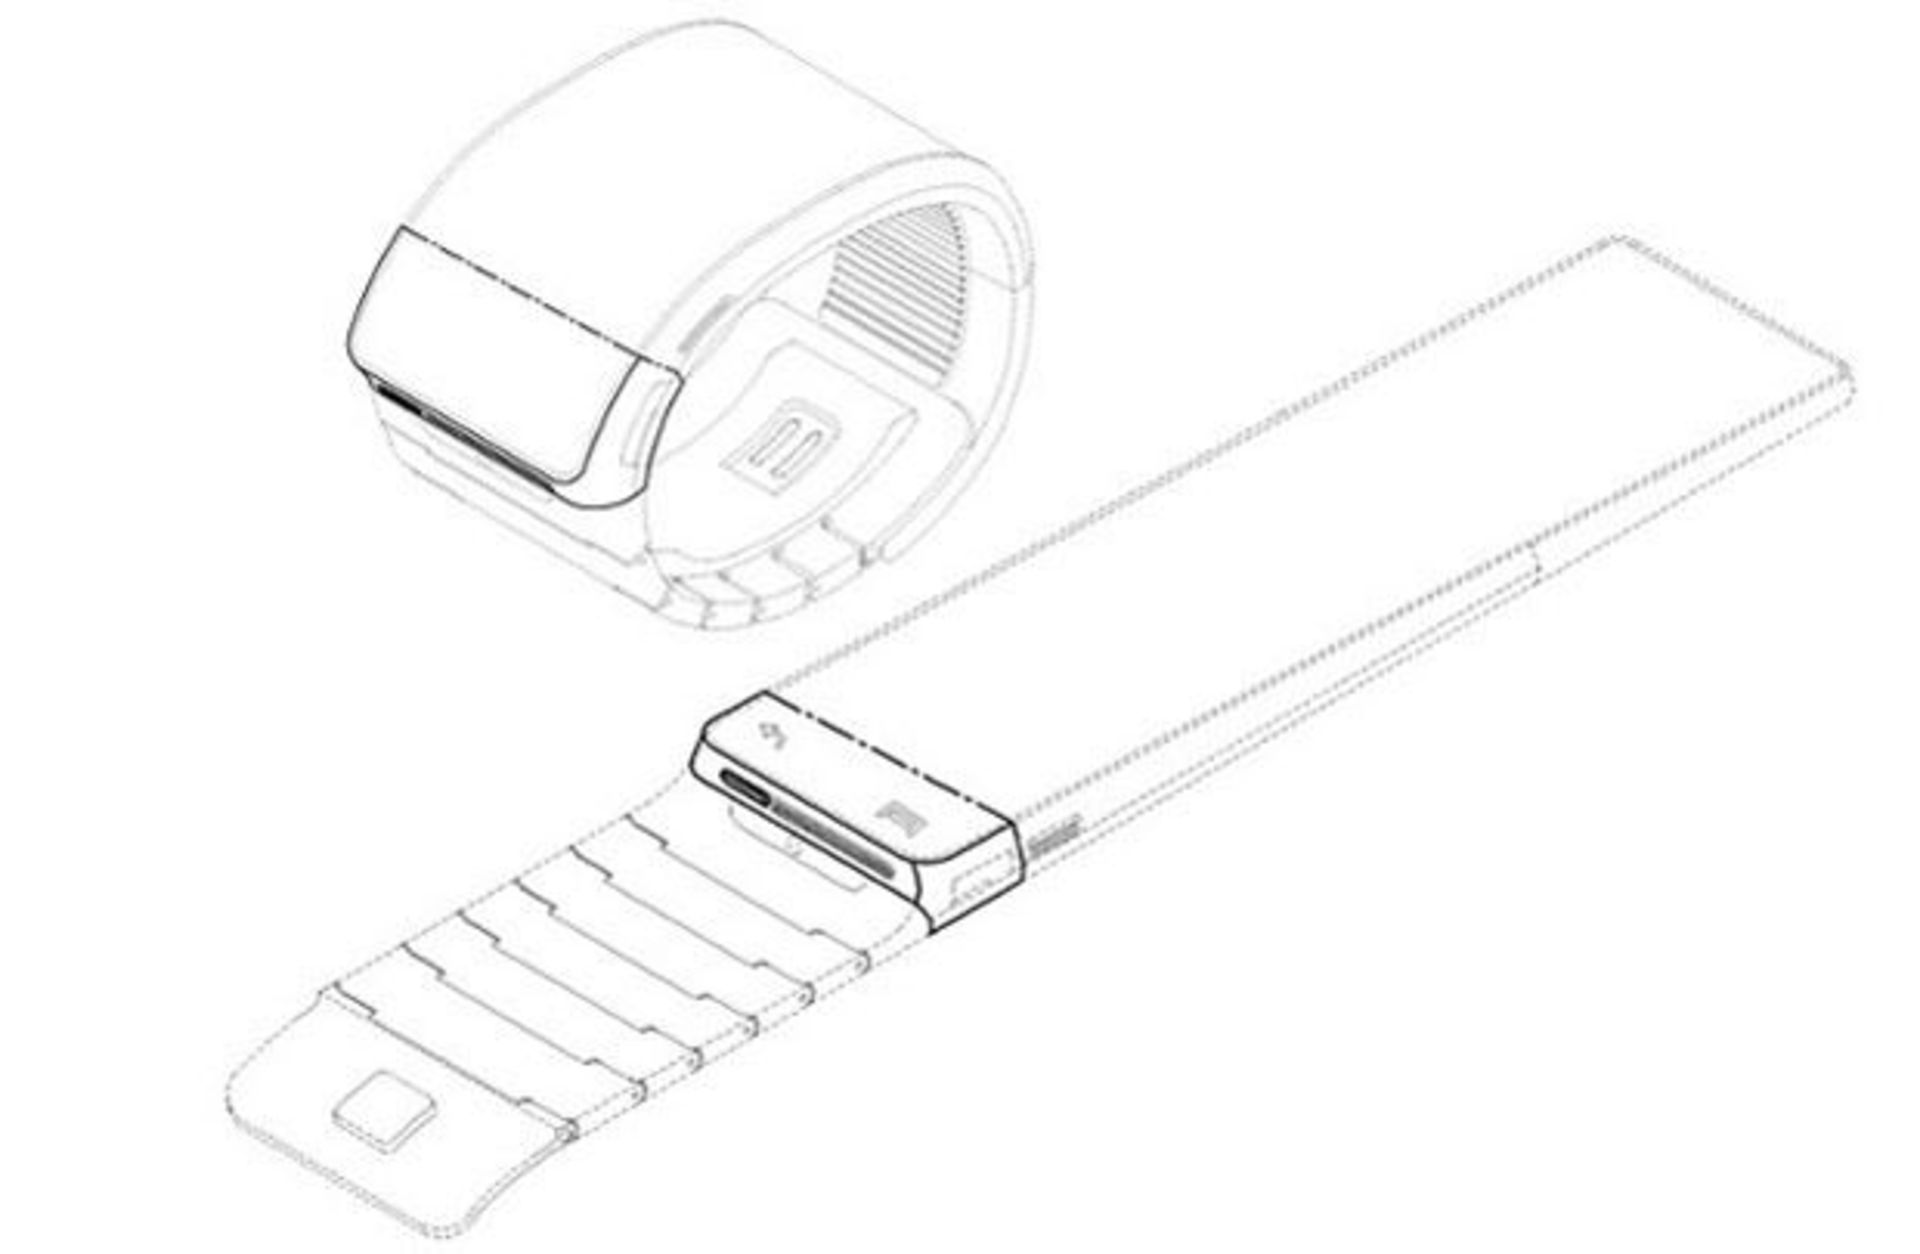 samsung smart watch patent